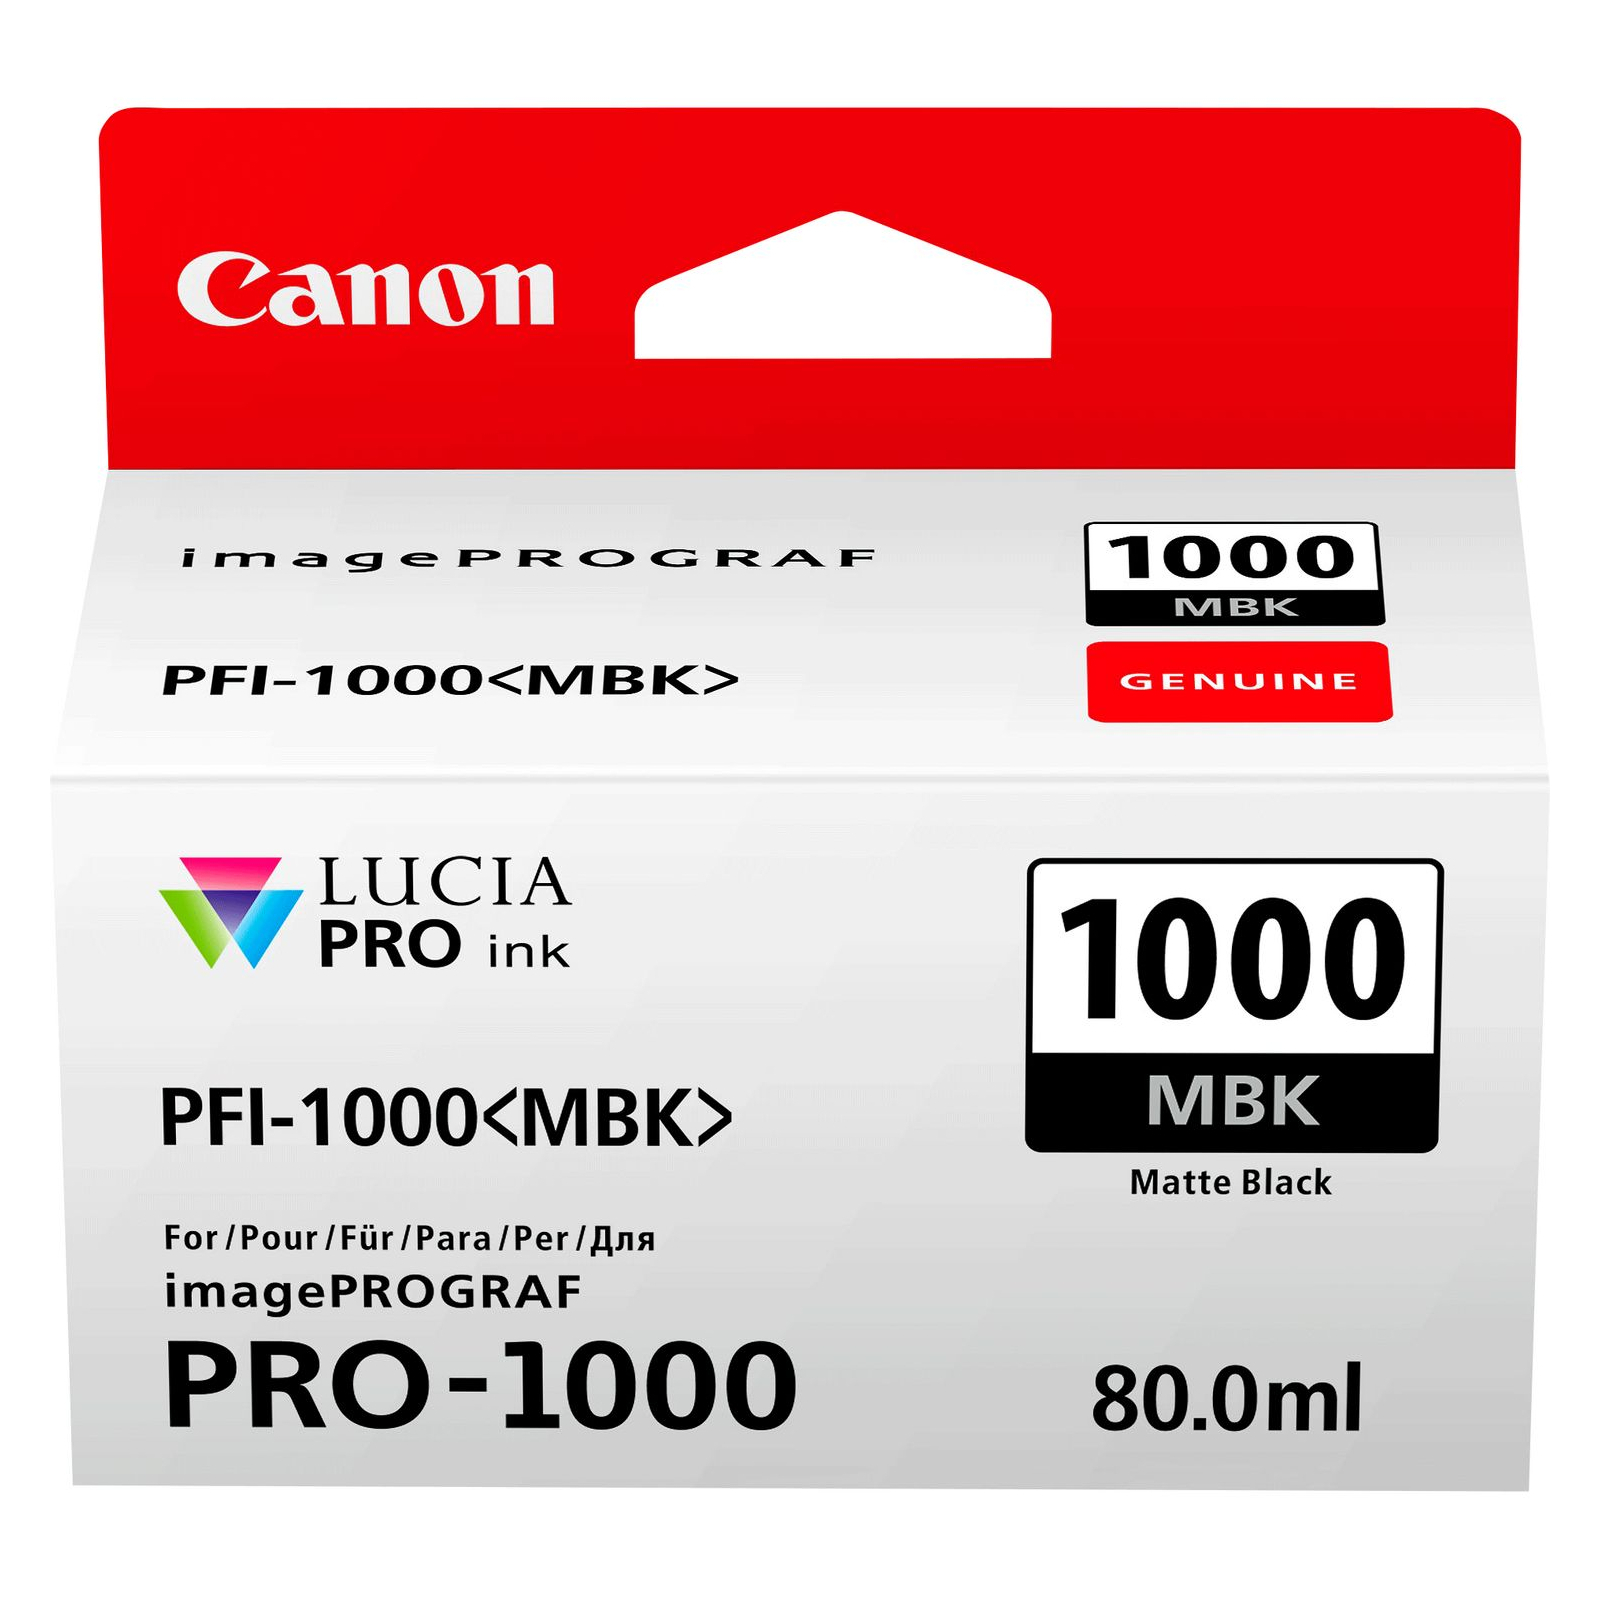 Картридж Canon PFI-1000Y (yellow) (0549C001)